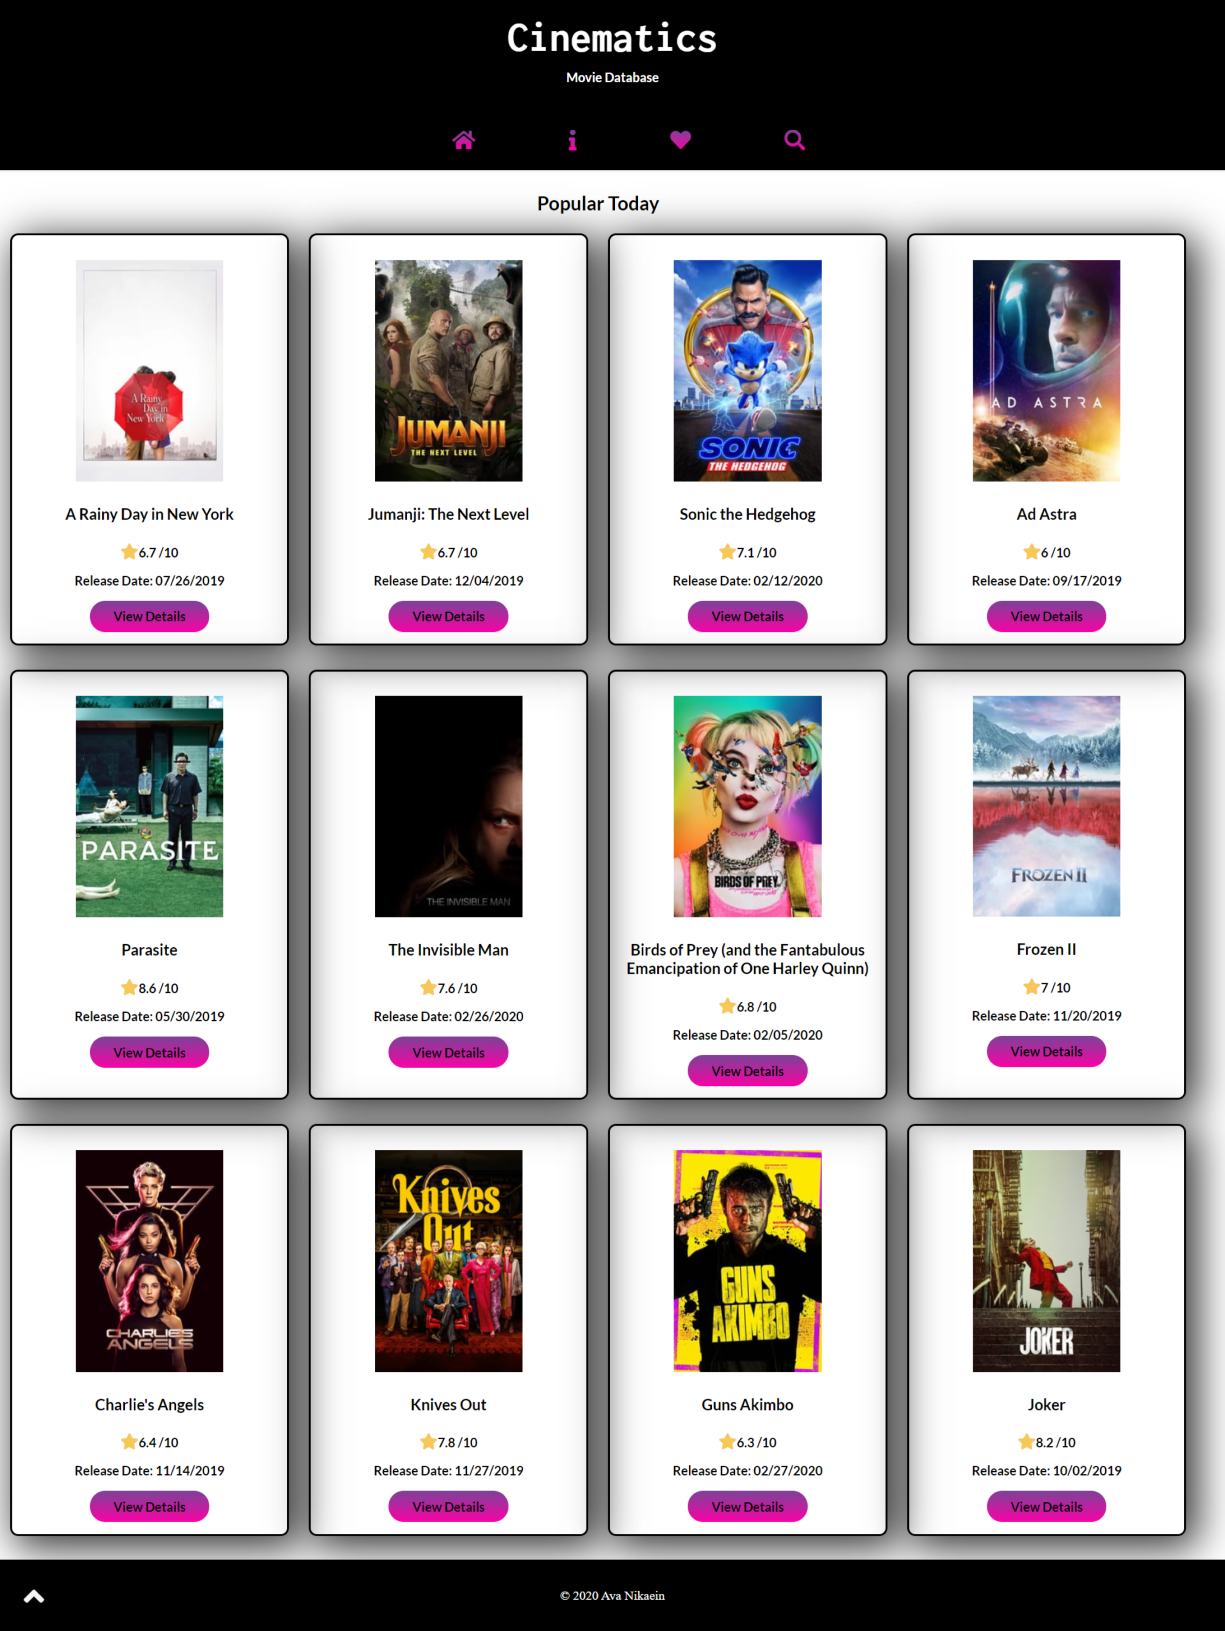 Screenshot of Cinematics home page